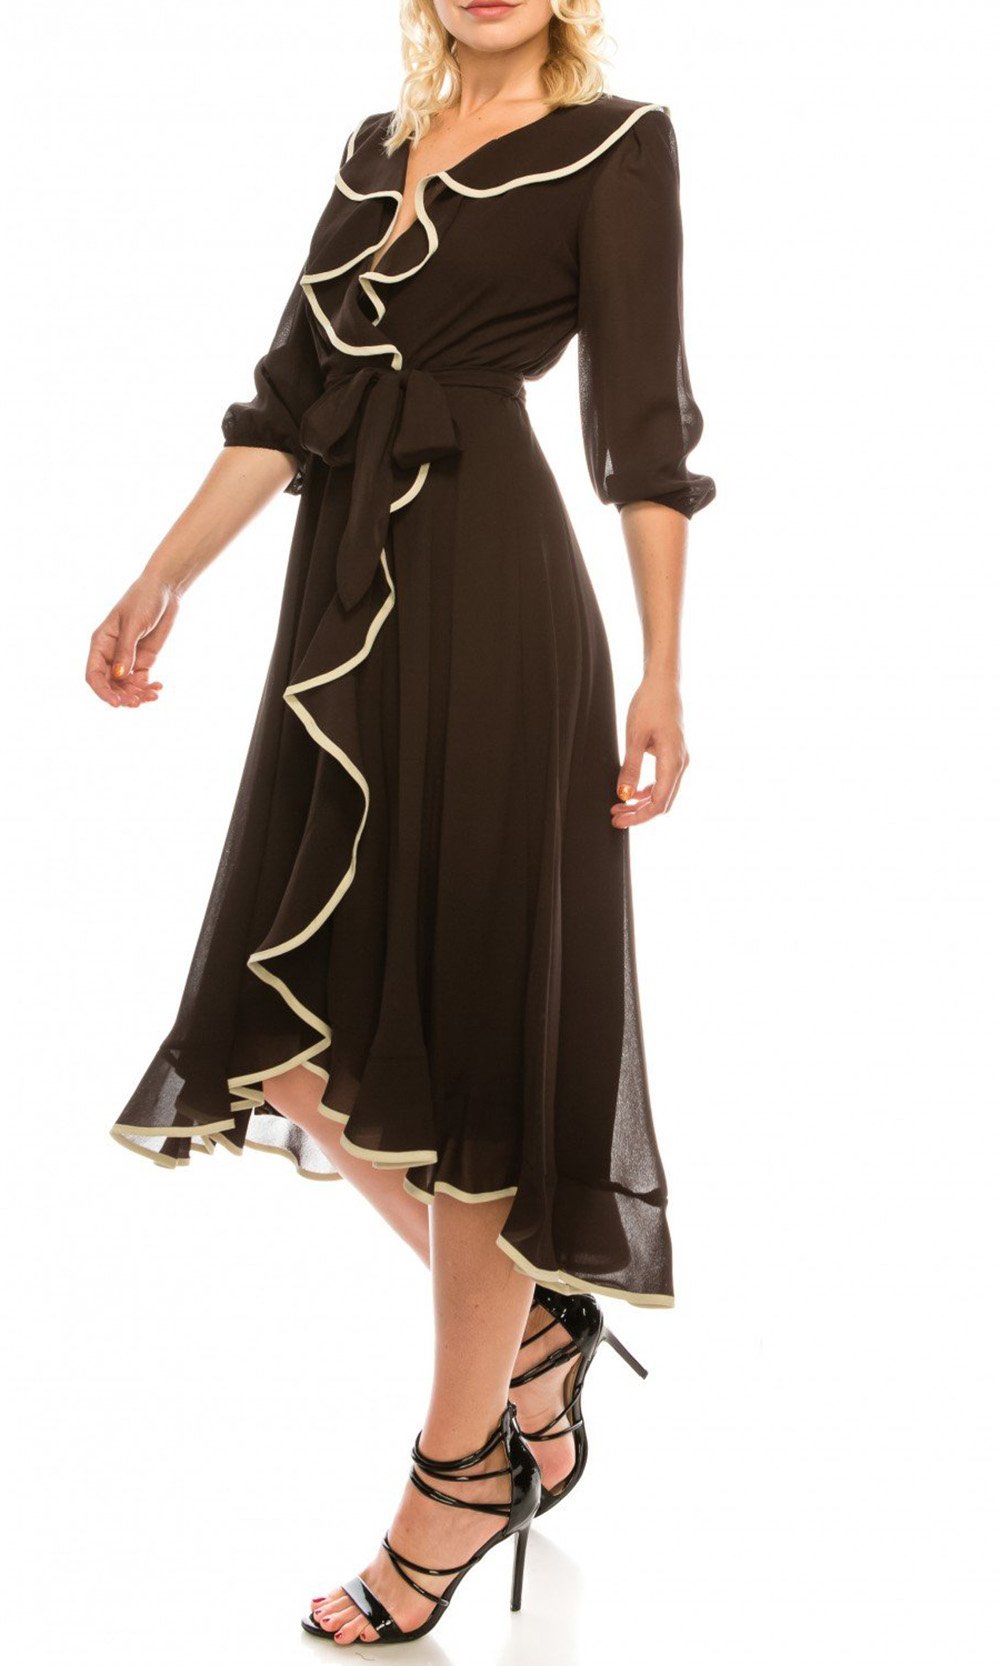 Gabby Skye - 57181MG Ruffle Contrast Trim A-Line Chiffon Dress In Brown